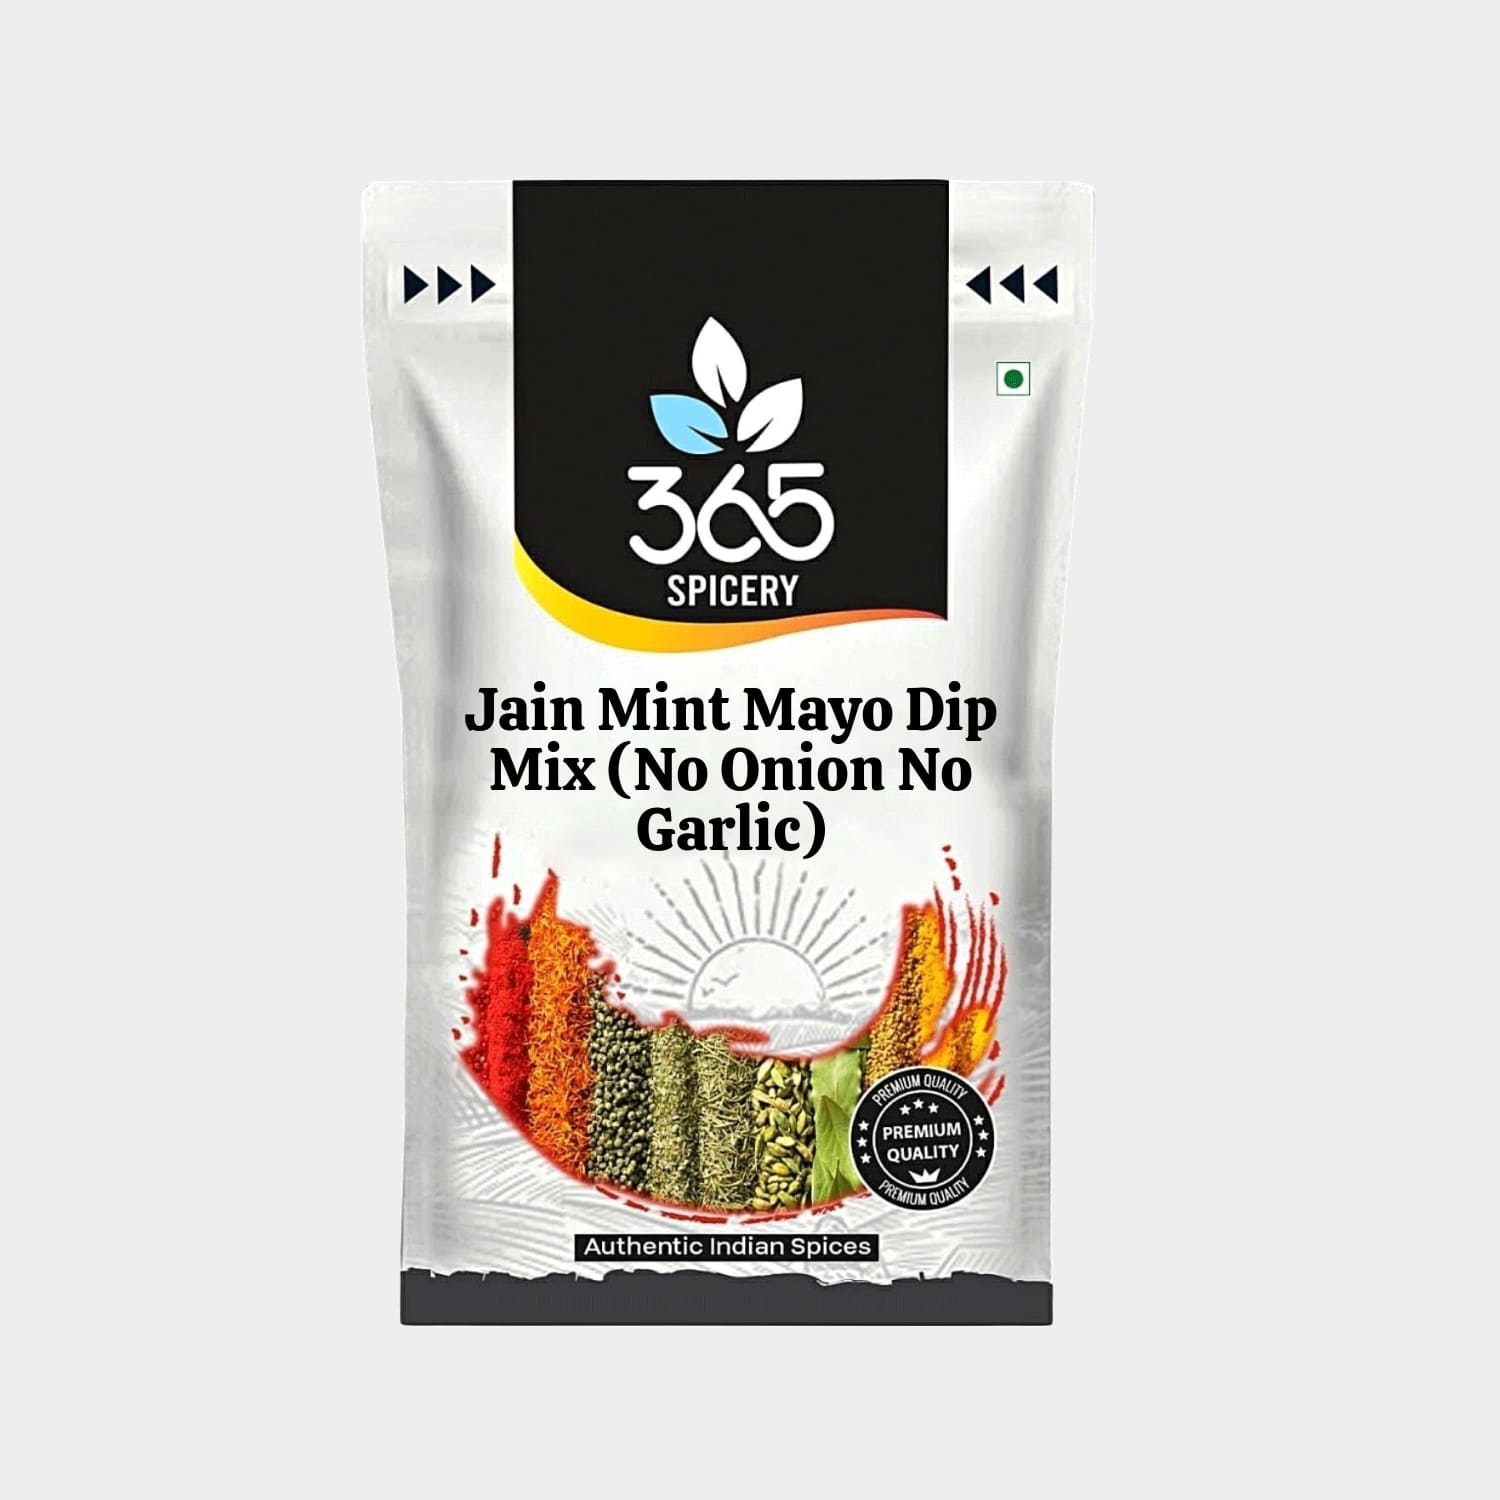 Jain Mint Mayo Dip Mix (No Onion No Garlic)